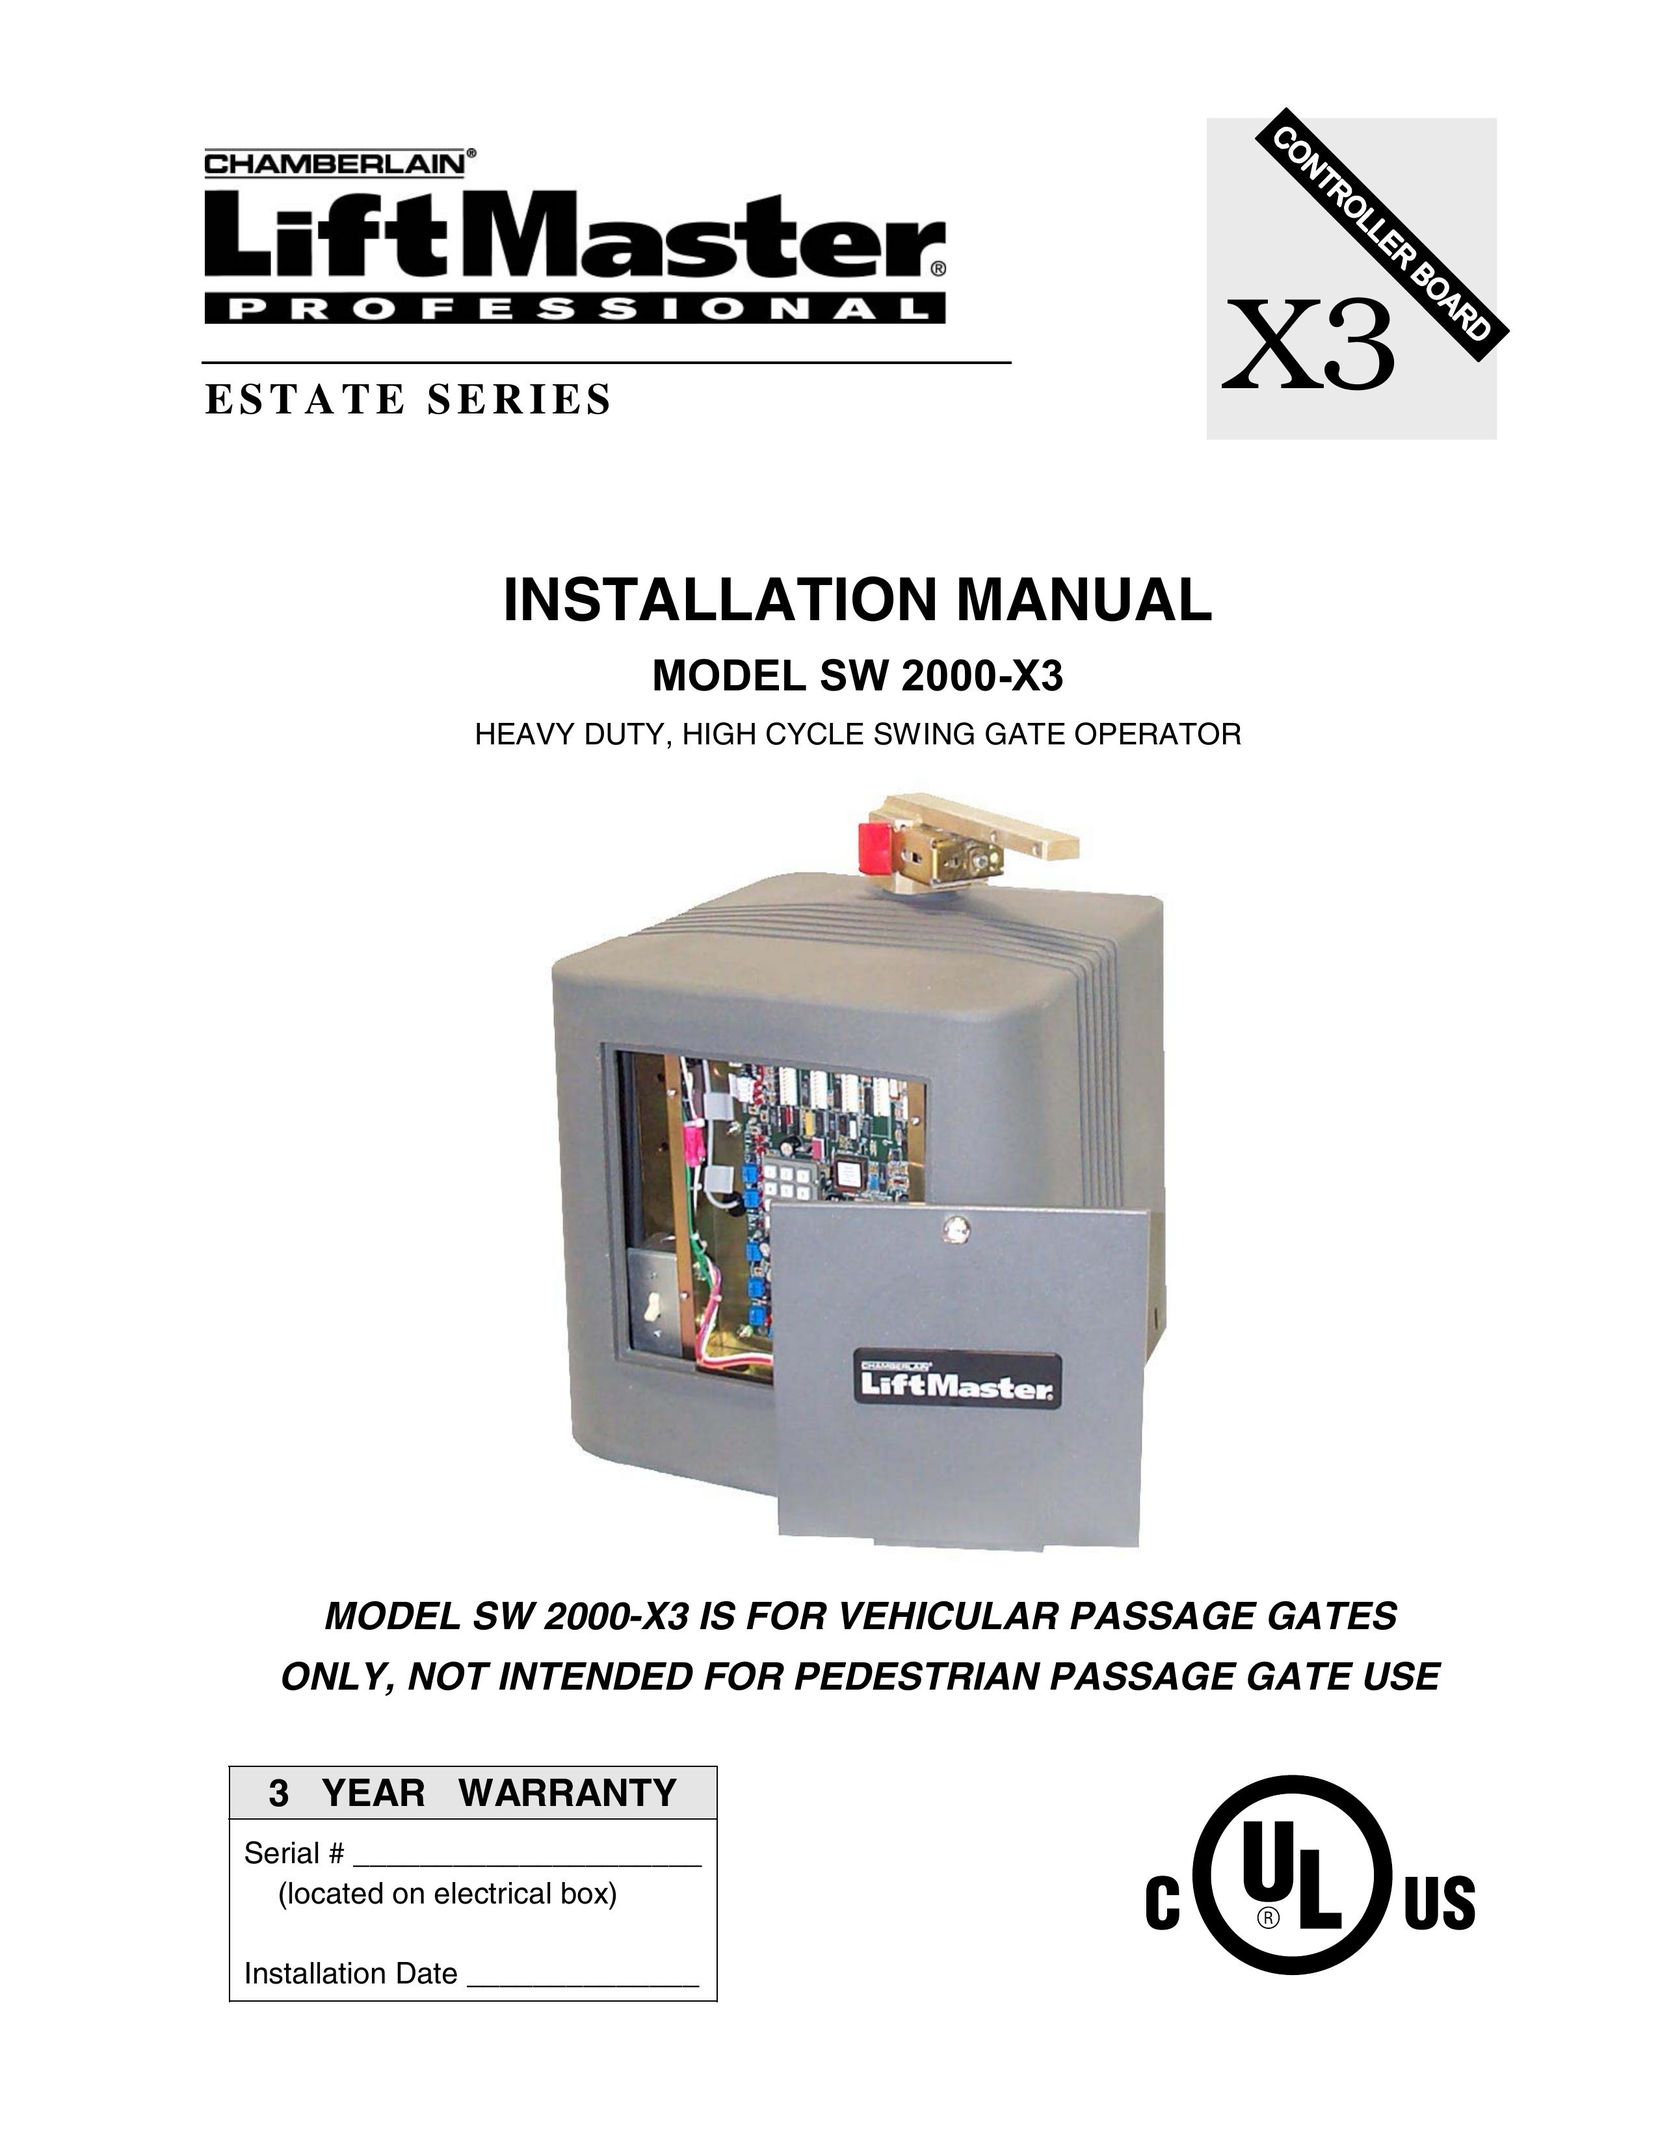 Chamberlain SW 2000-X3 Safety Gate User Manual